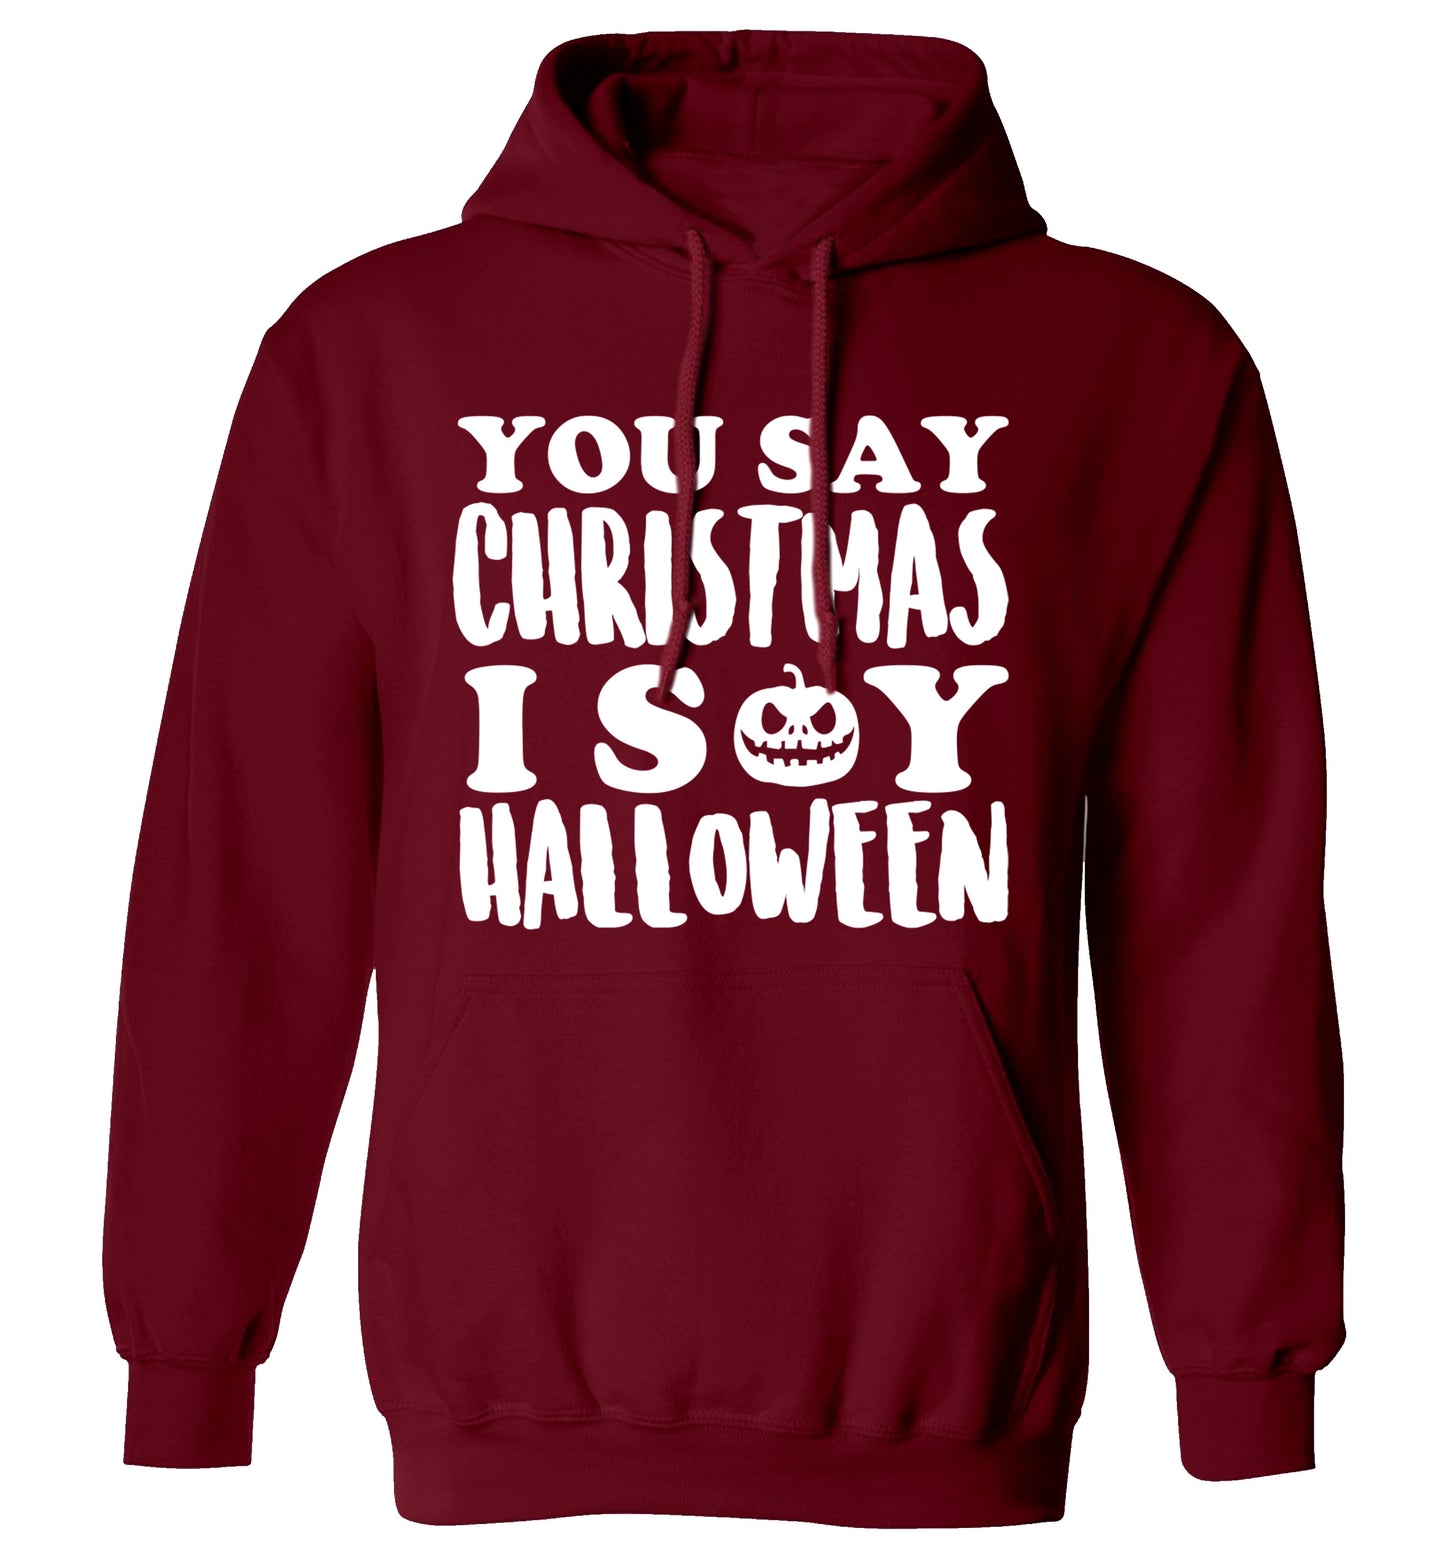 You say christmas I say halloween! adults unisex maroon hoodie 2XL